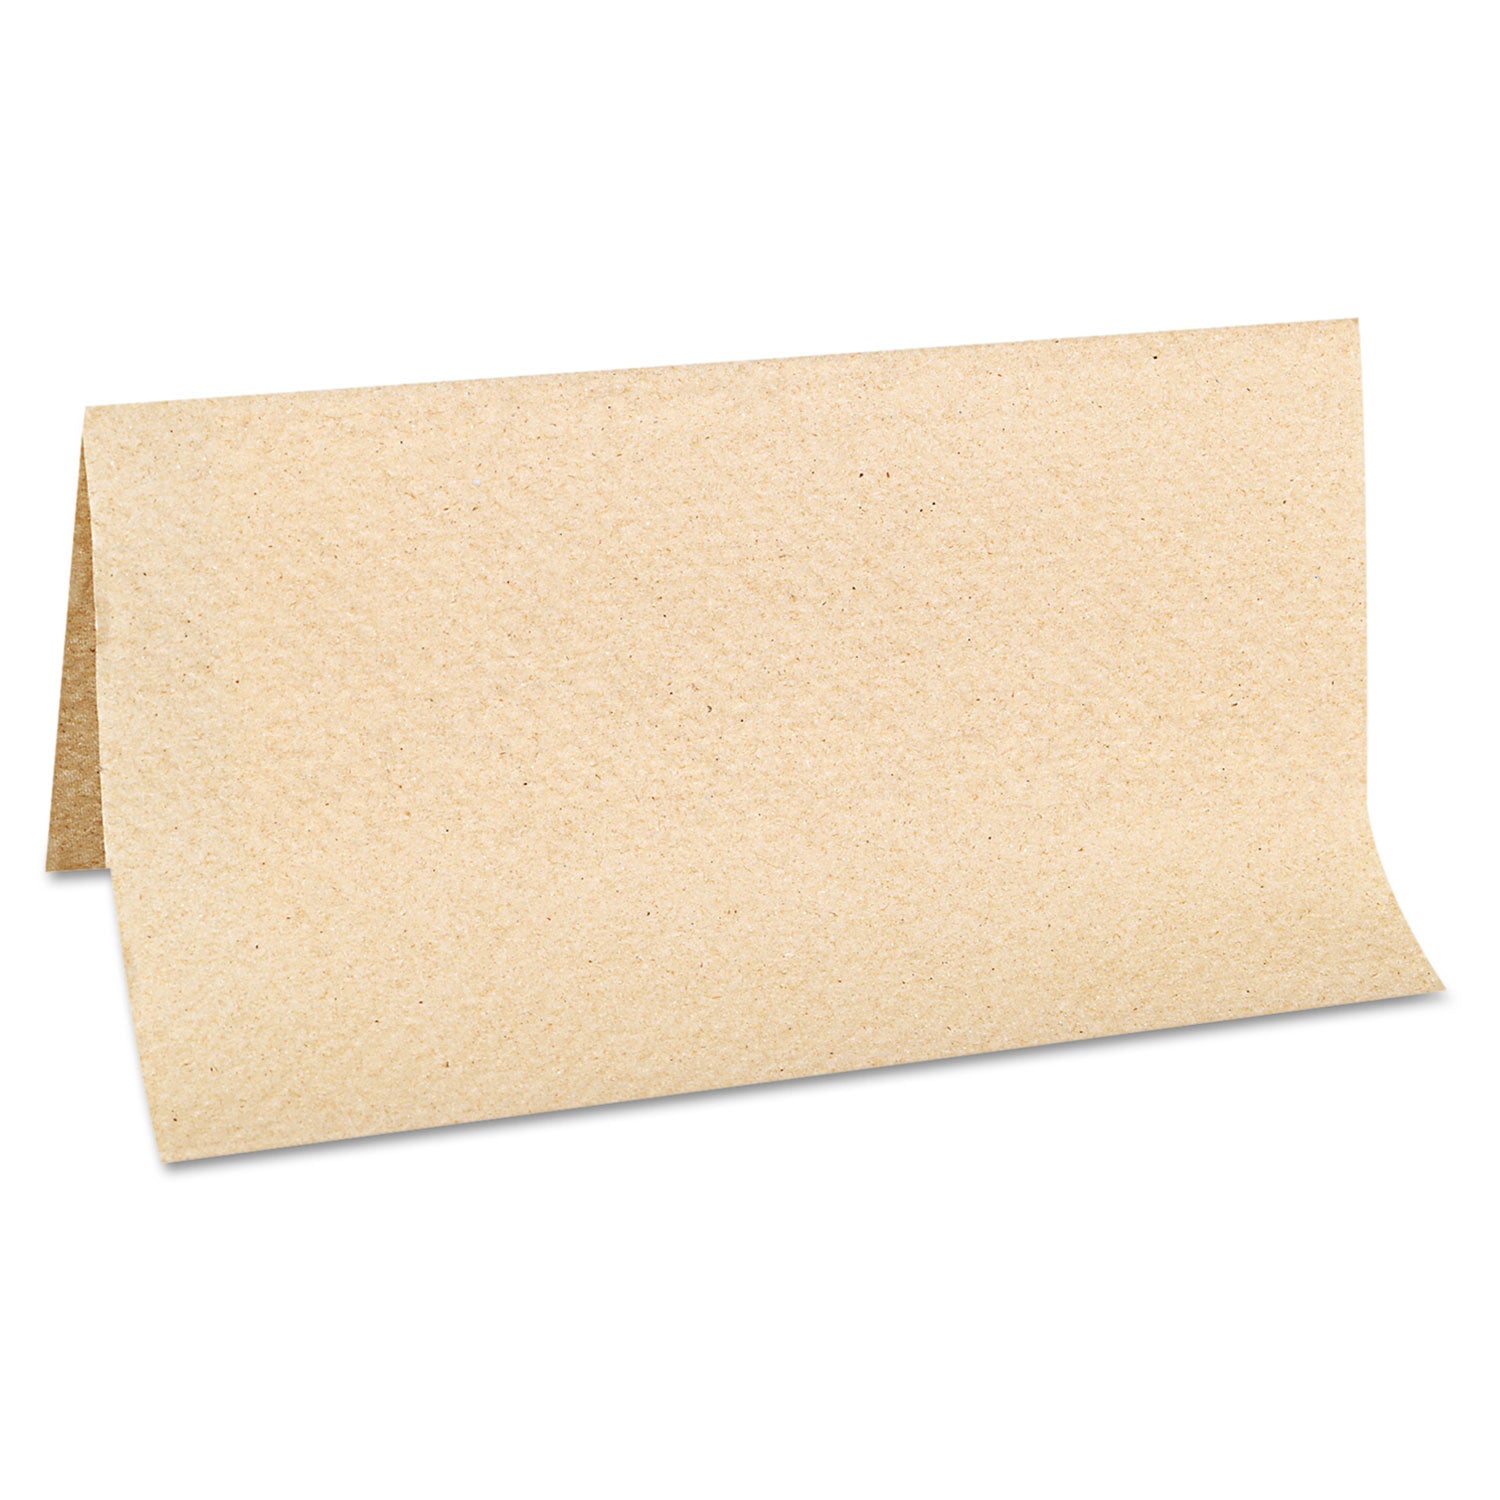 Singlefold Paper Towels, 9 x 9.45, Natural, 250/Pack, 16 Packs/Carton - 